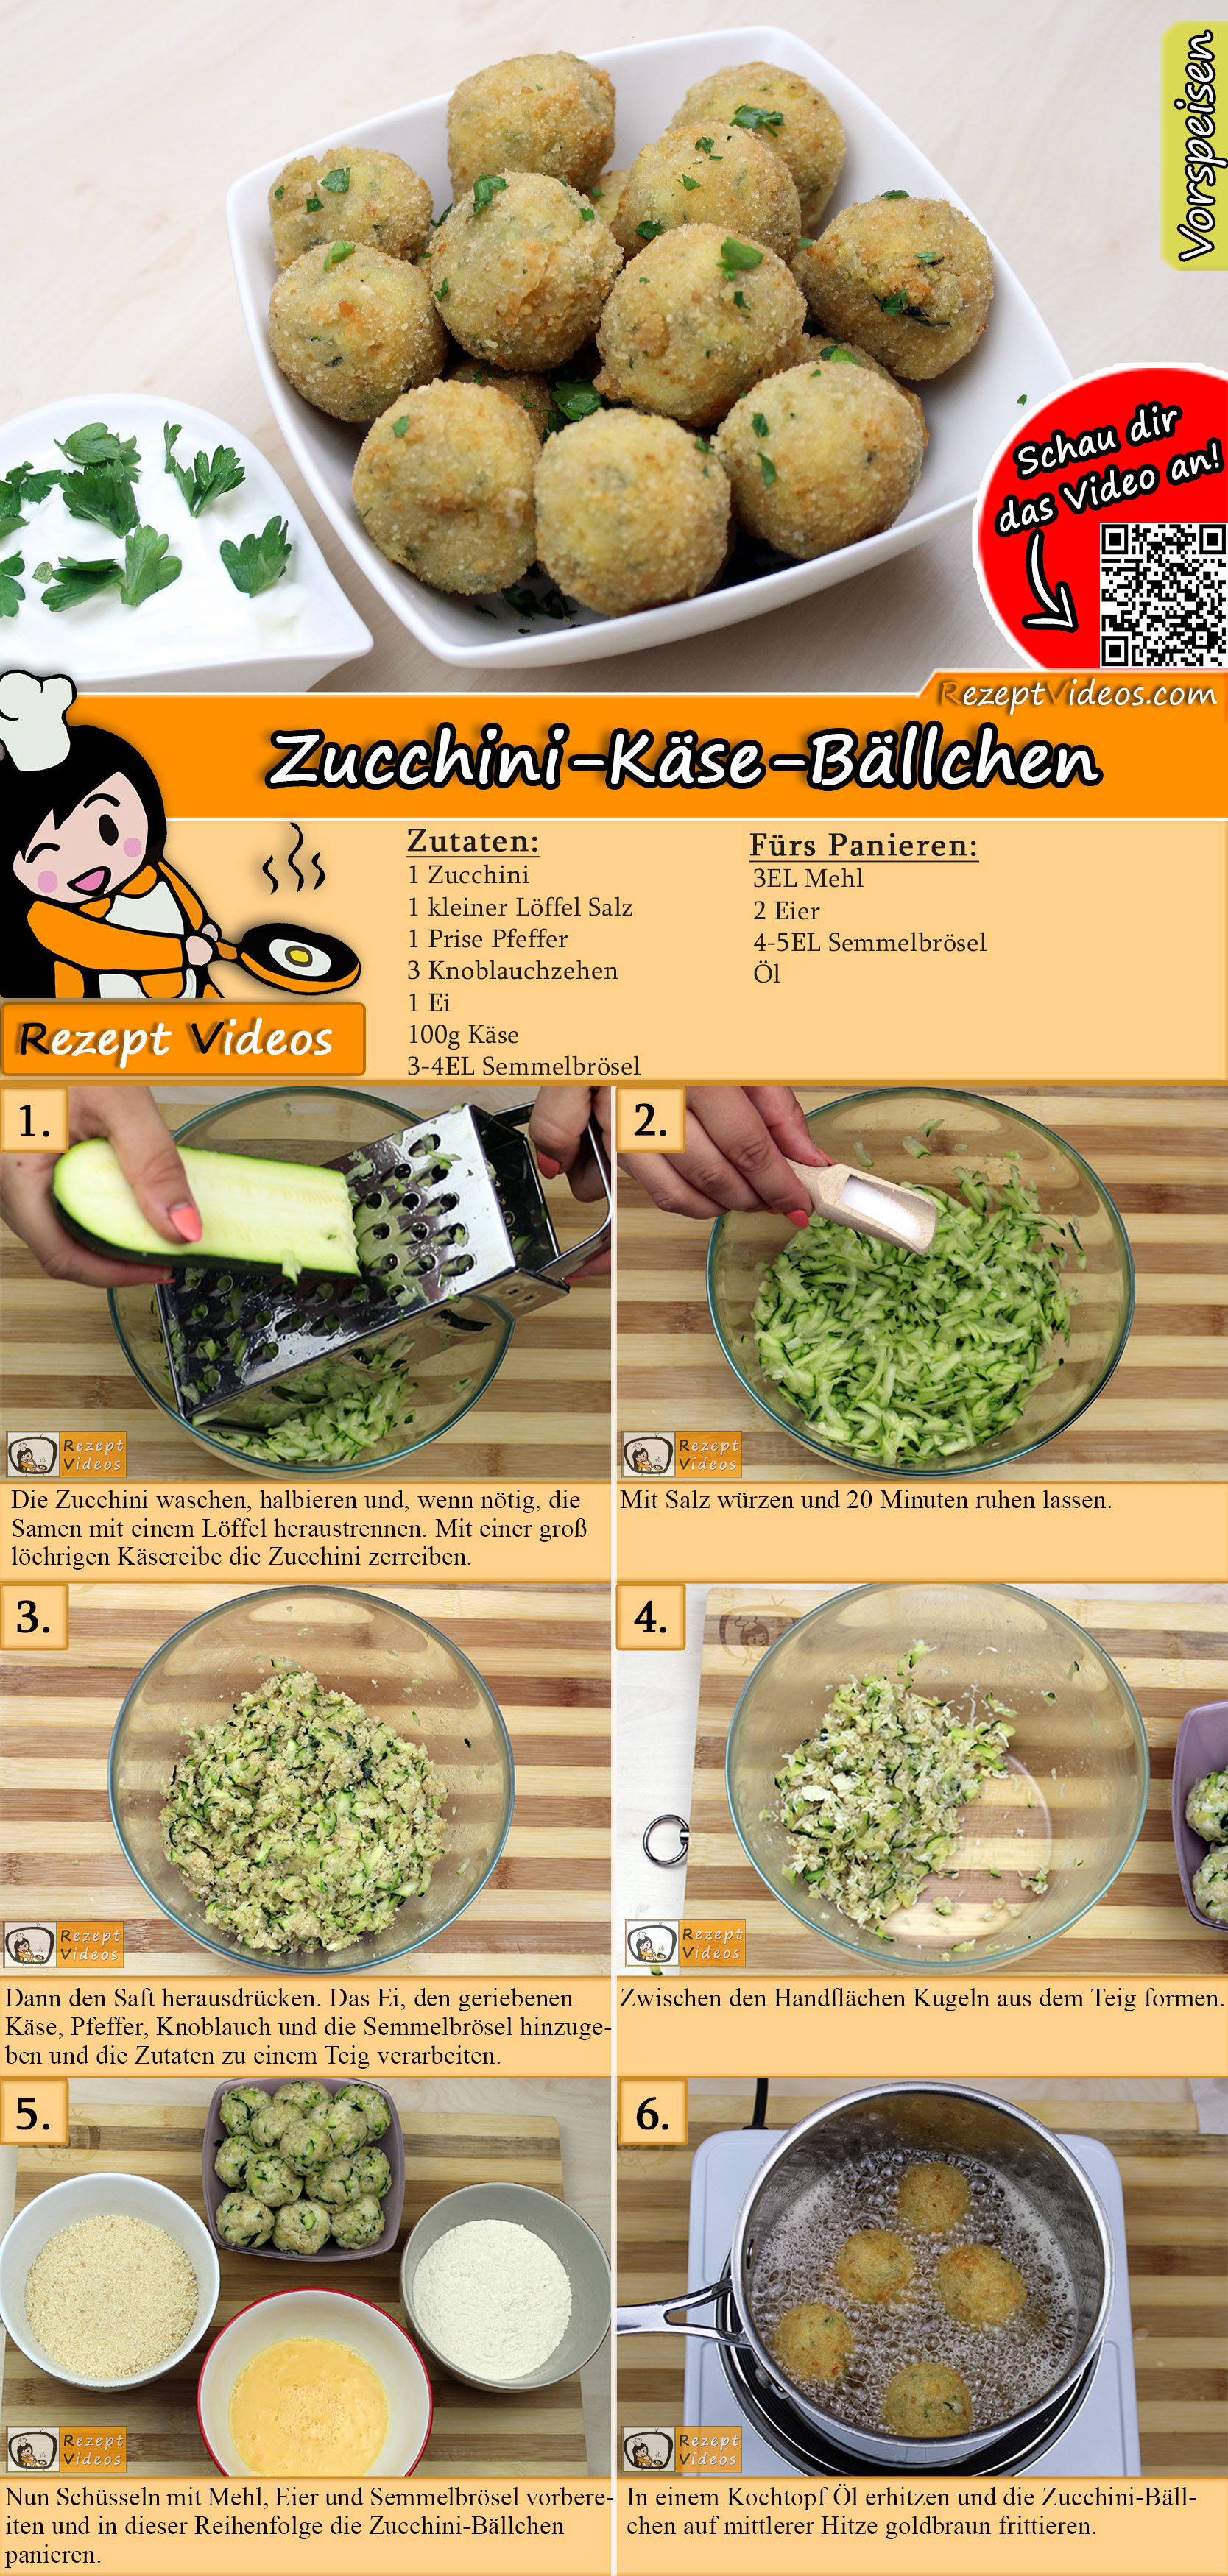 Zucchini-Käse-Bällchen Rezept mit Video